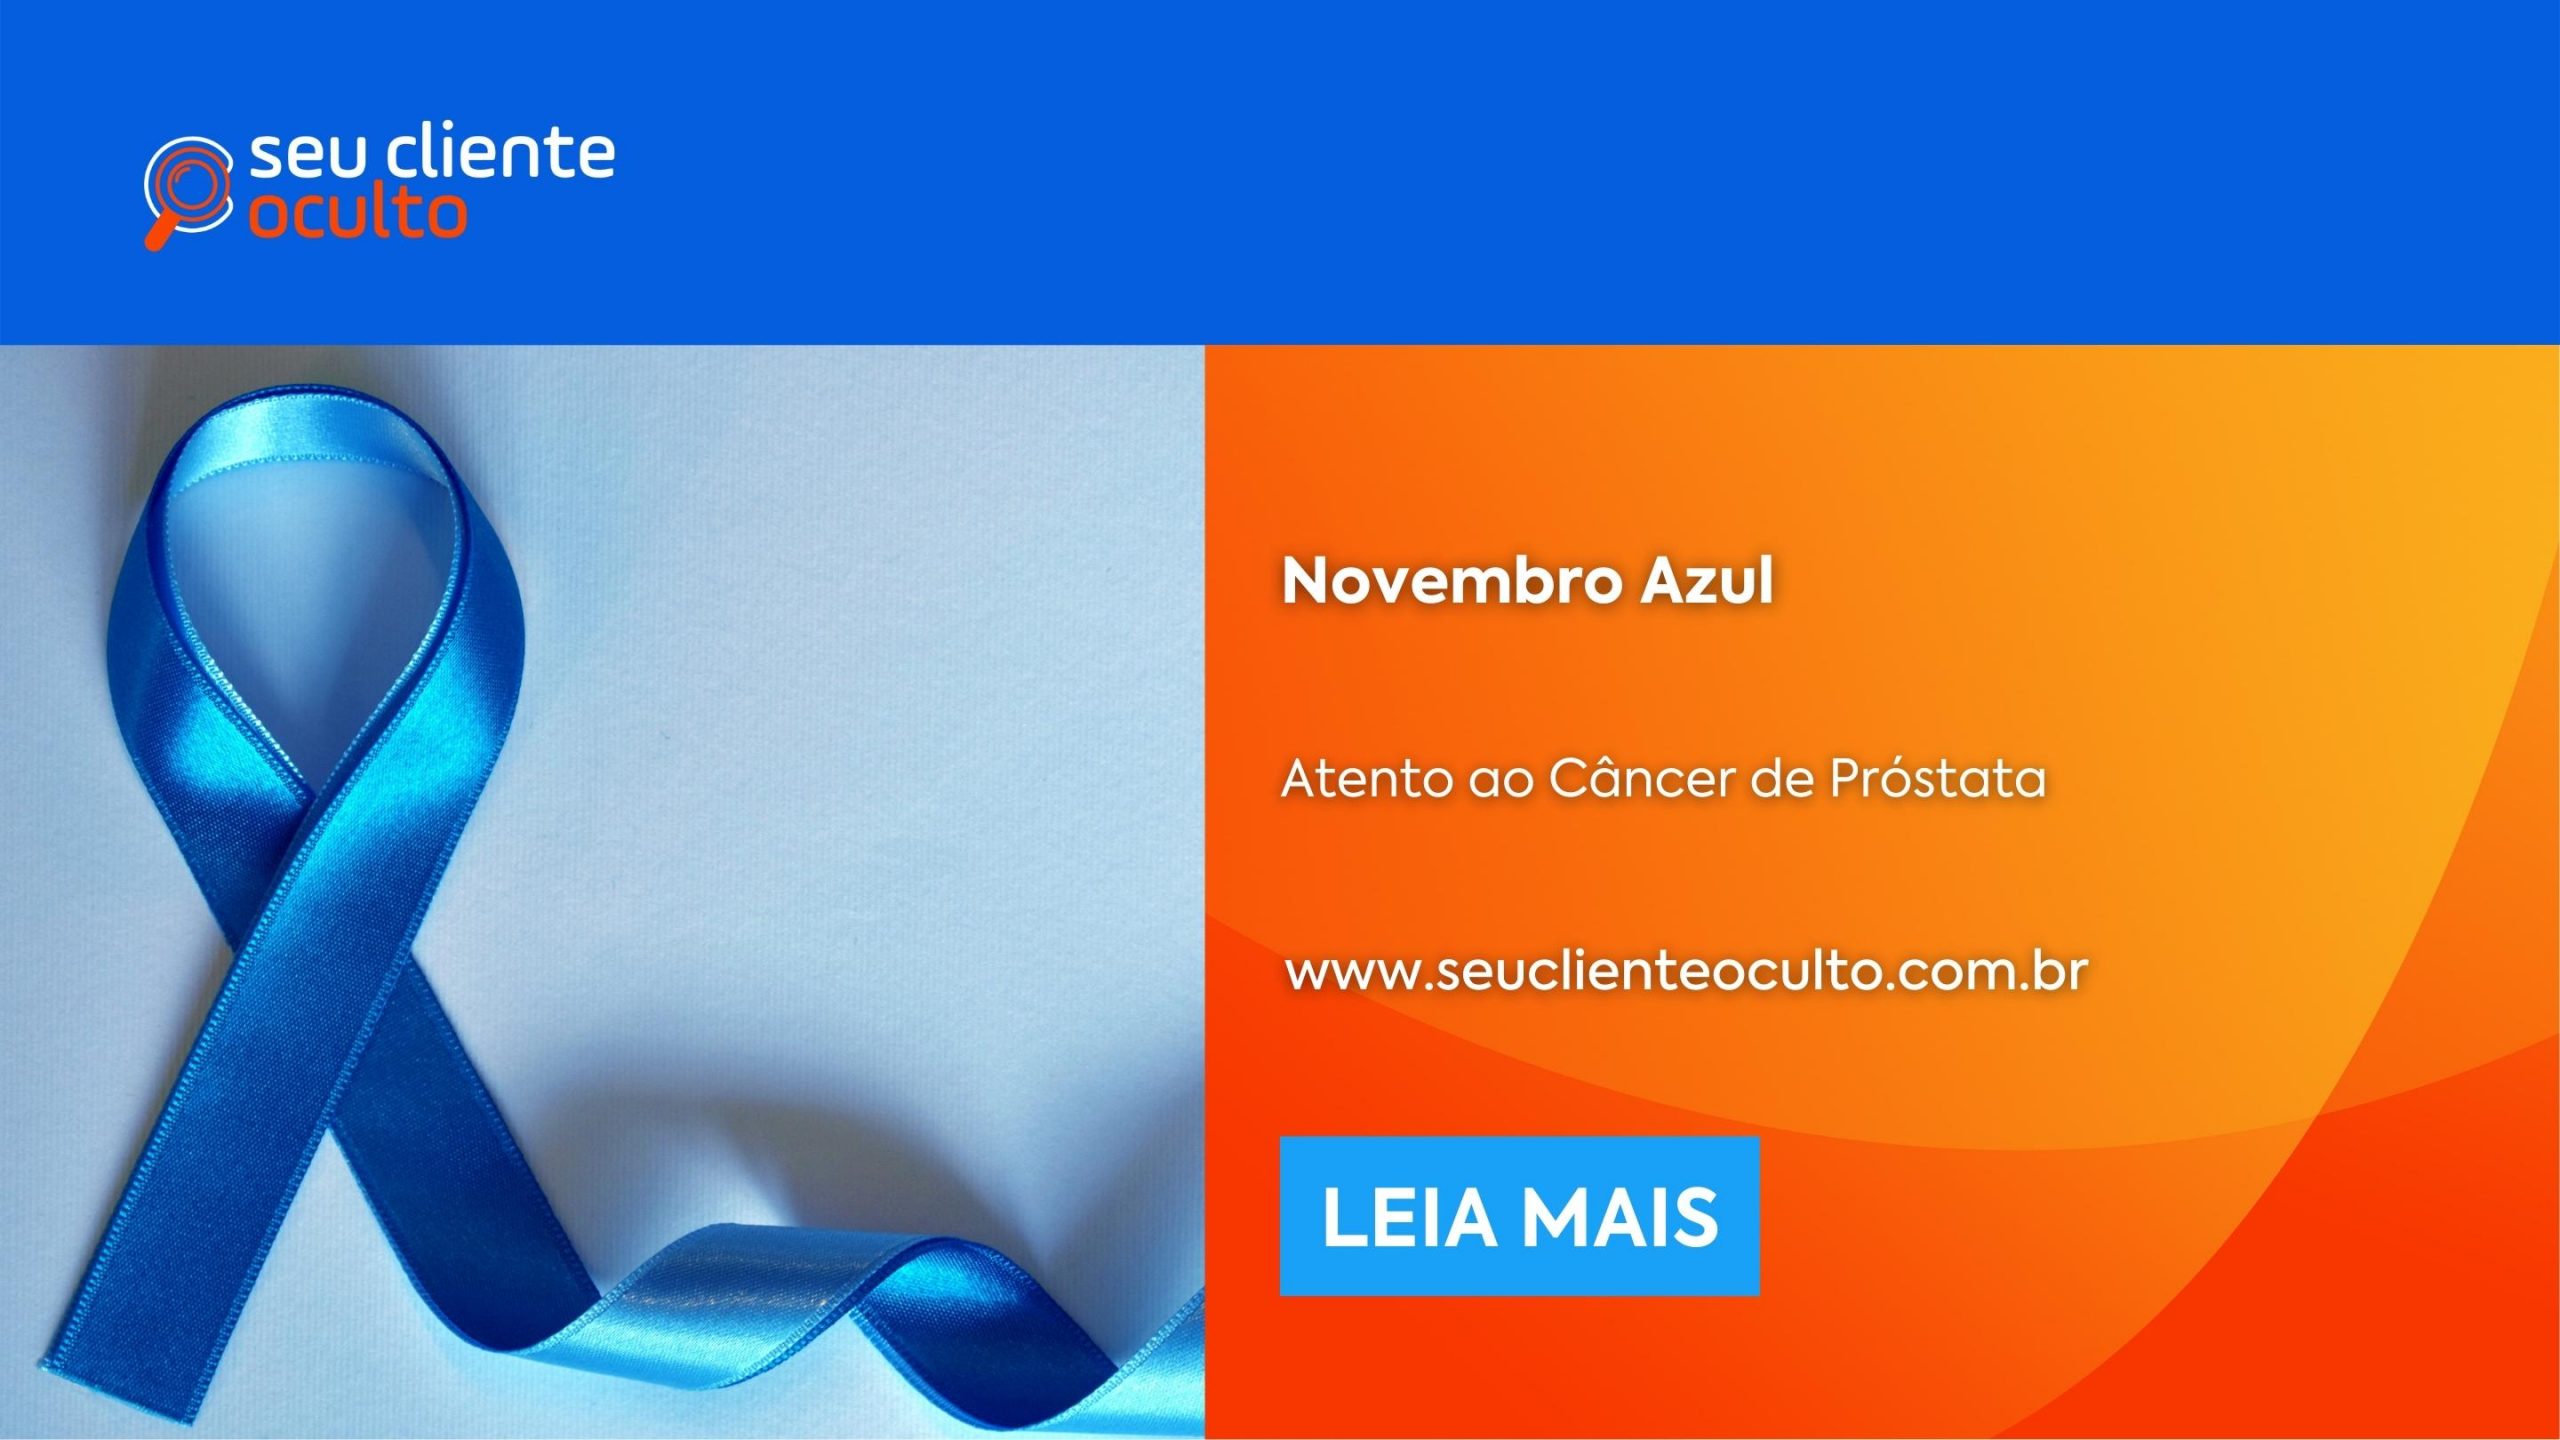 Novembro Azul: Atento ao Câncer de Próstata - Seu Cliente Oculto